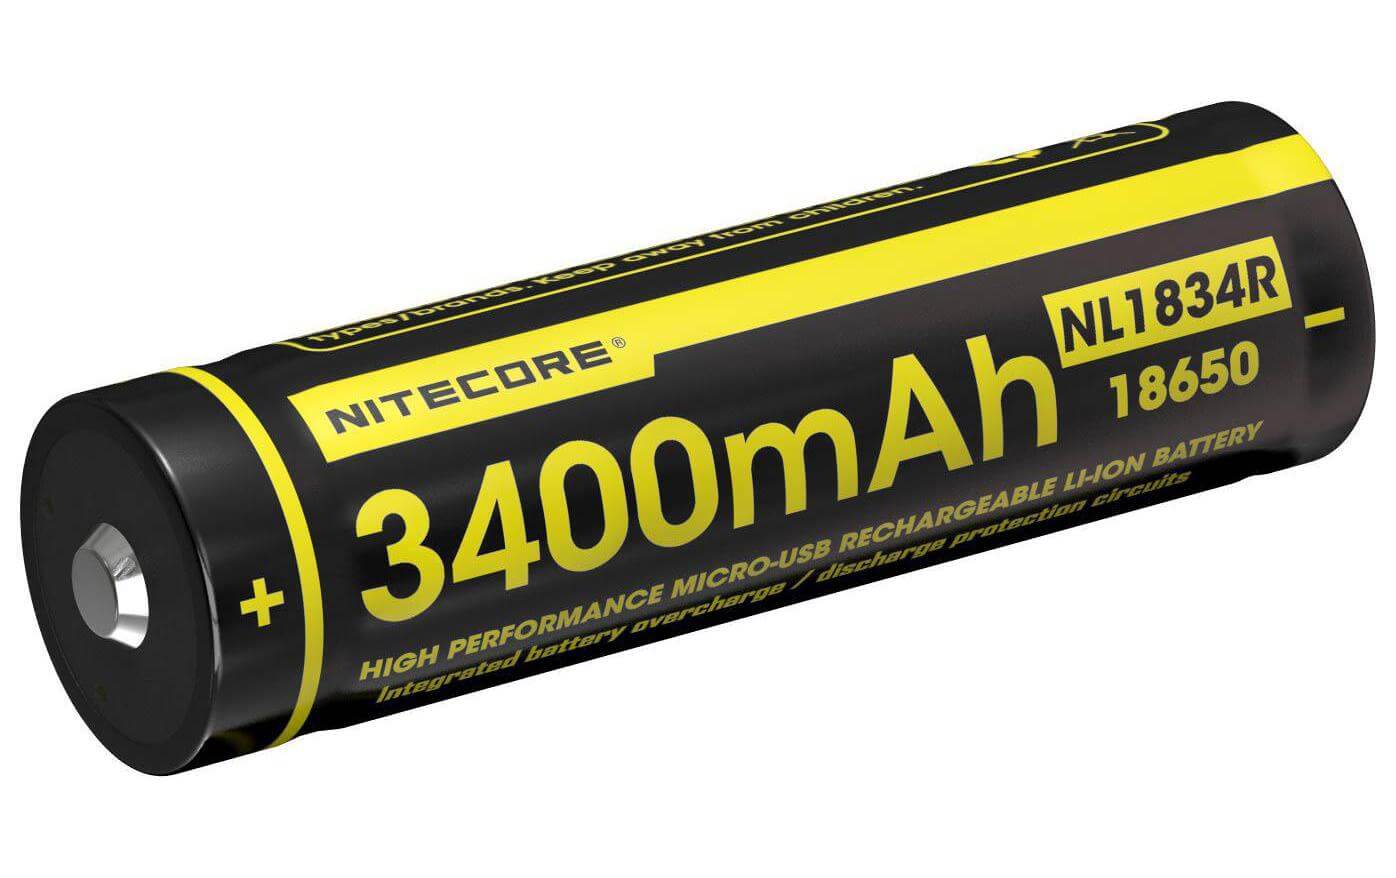 Nitecore Batteria Nitecore NL1834R 18650 3400 mAh nitecore